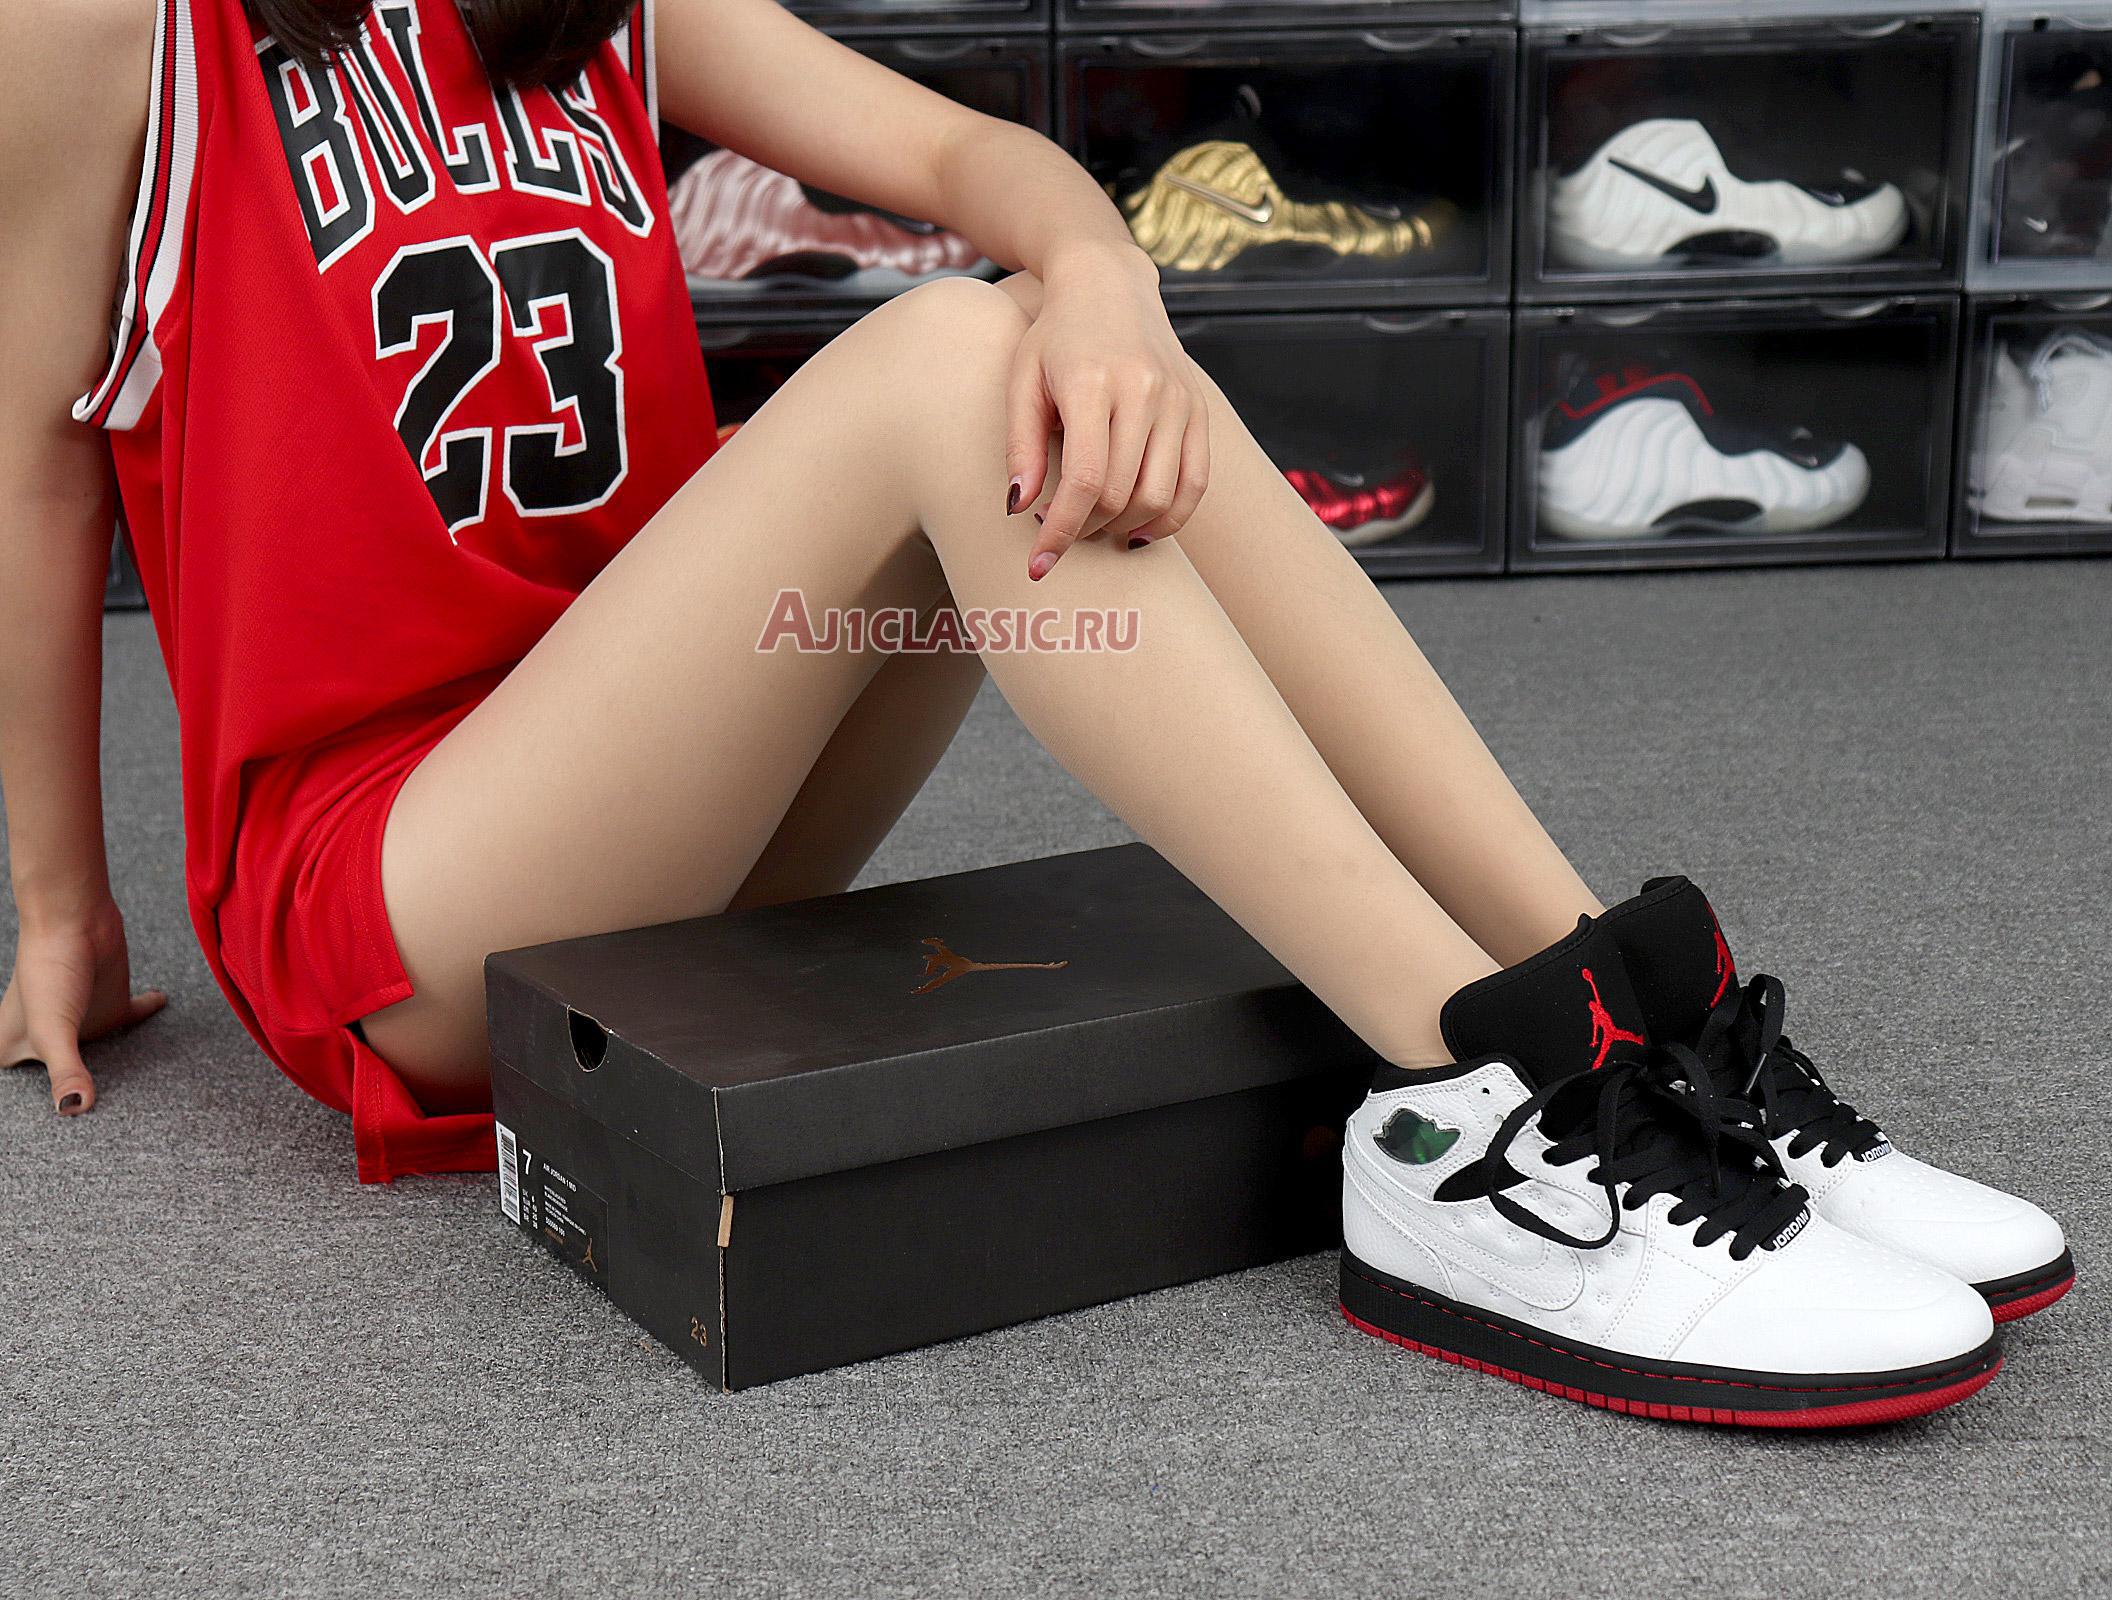 Air Jordan 1 Retro 97 He Got Game 555069-101 White/Black-Gym Red Sneakers